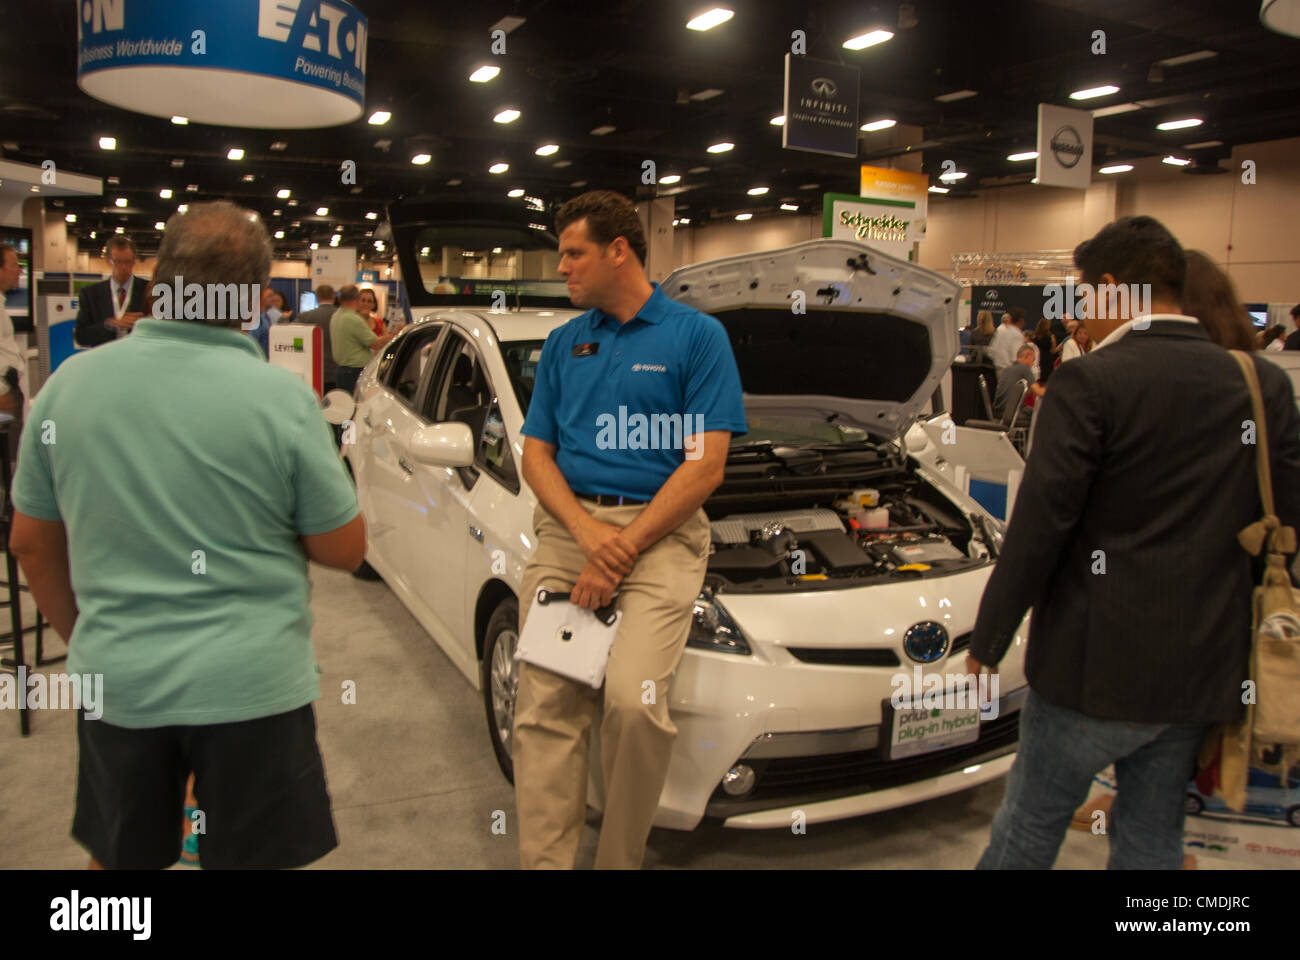 24 July 2012 San Antonio, Texas, USA Toyota Prius, an electric car